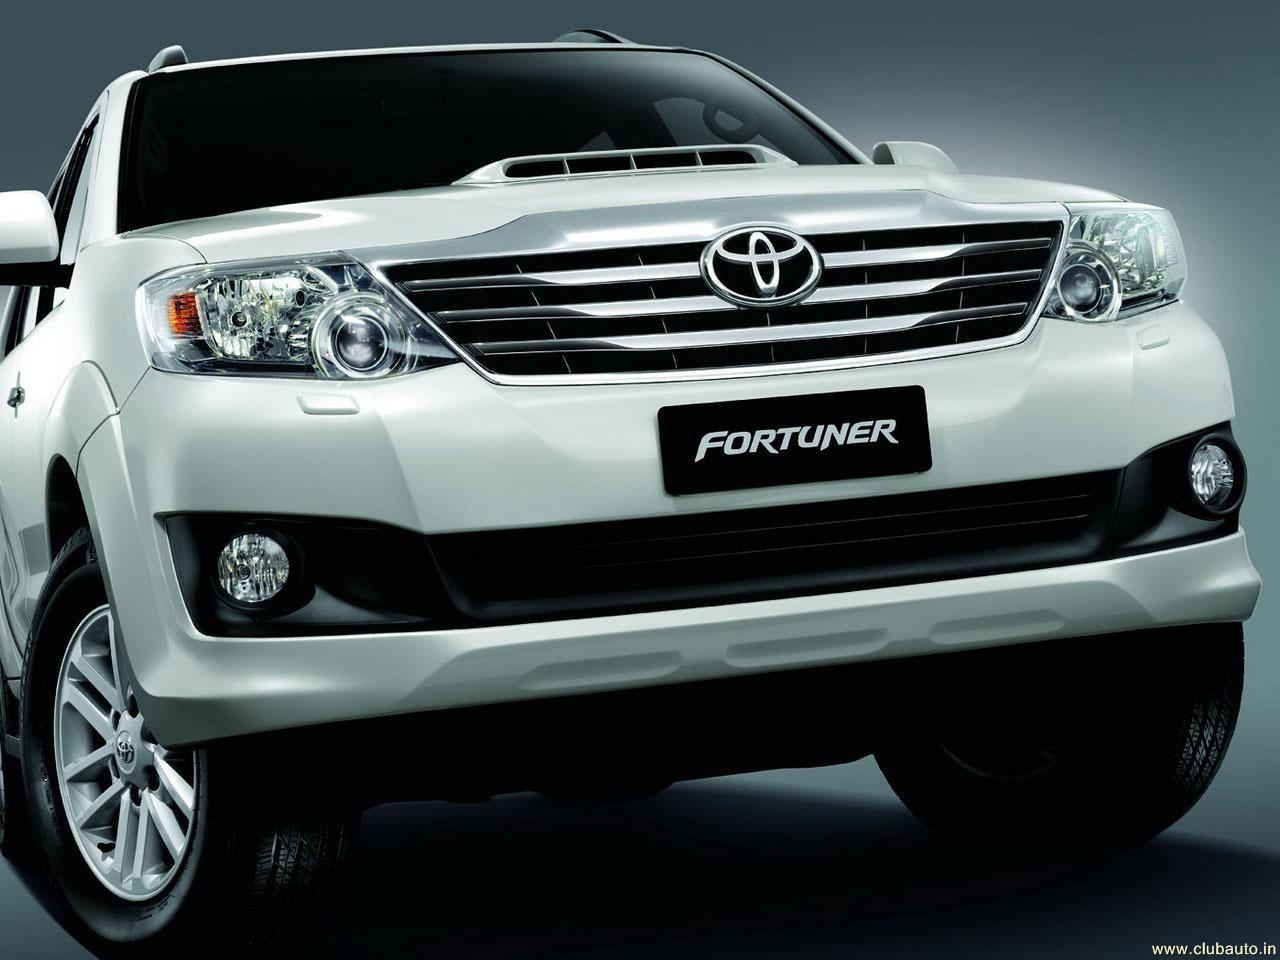 Wallpaper > Cars > Toyota > Fortuner > Toyota Fortuner high